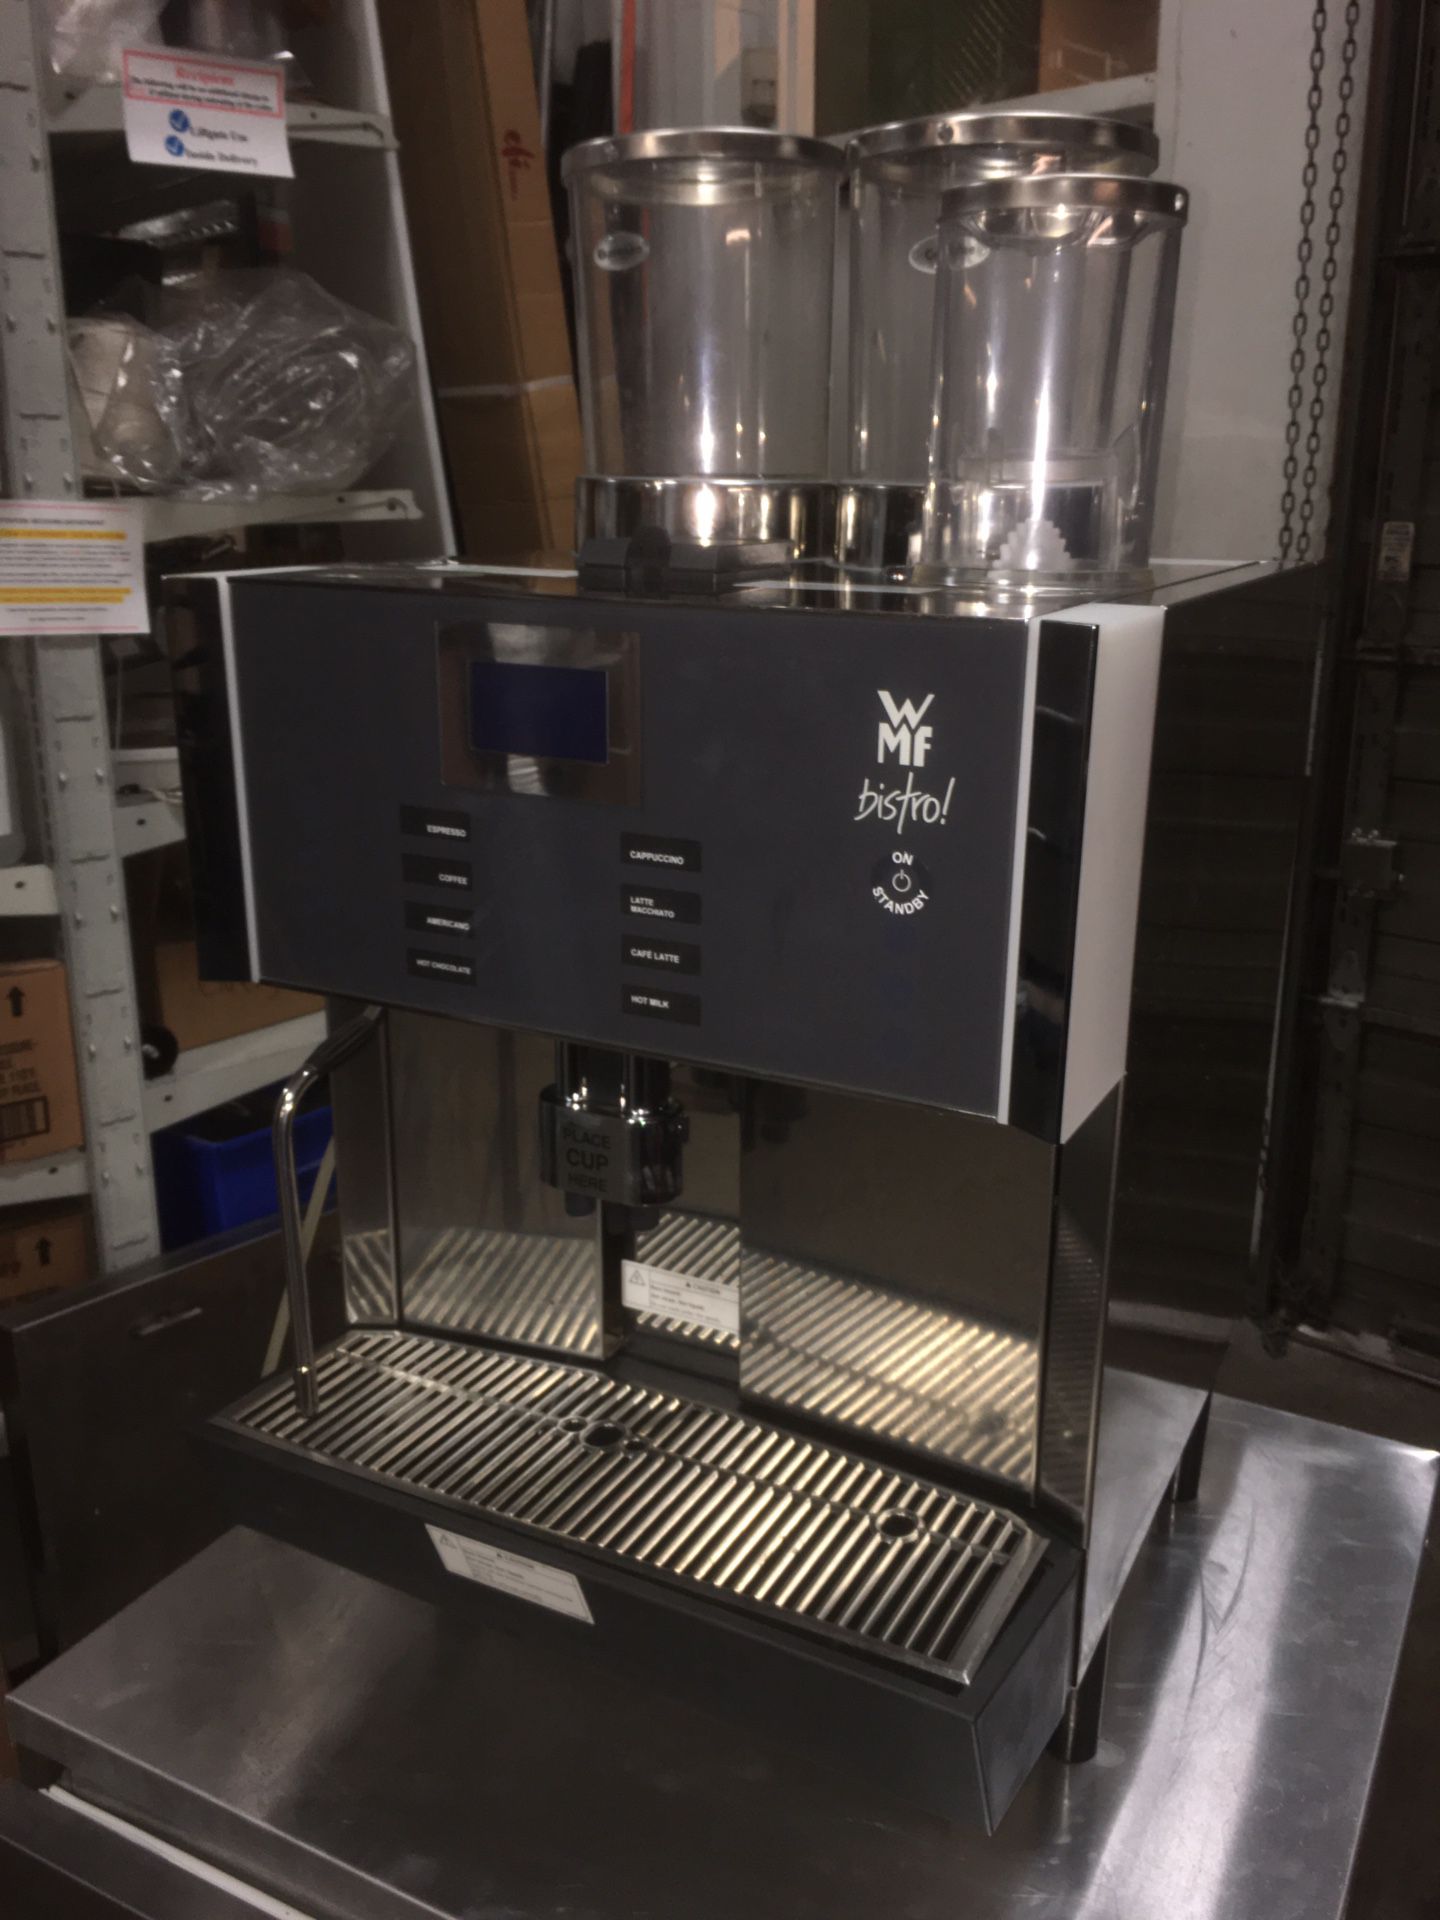 WMF Bistro Auto Espresso Machine like new!